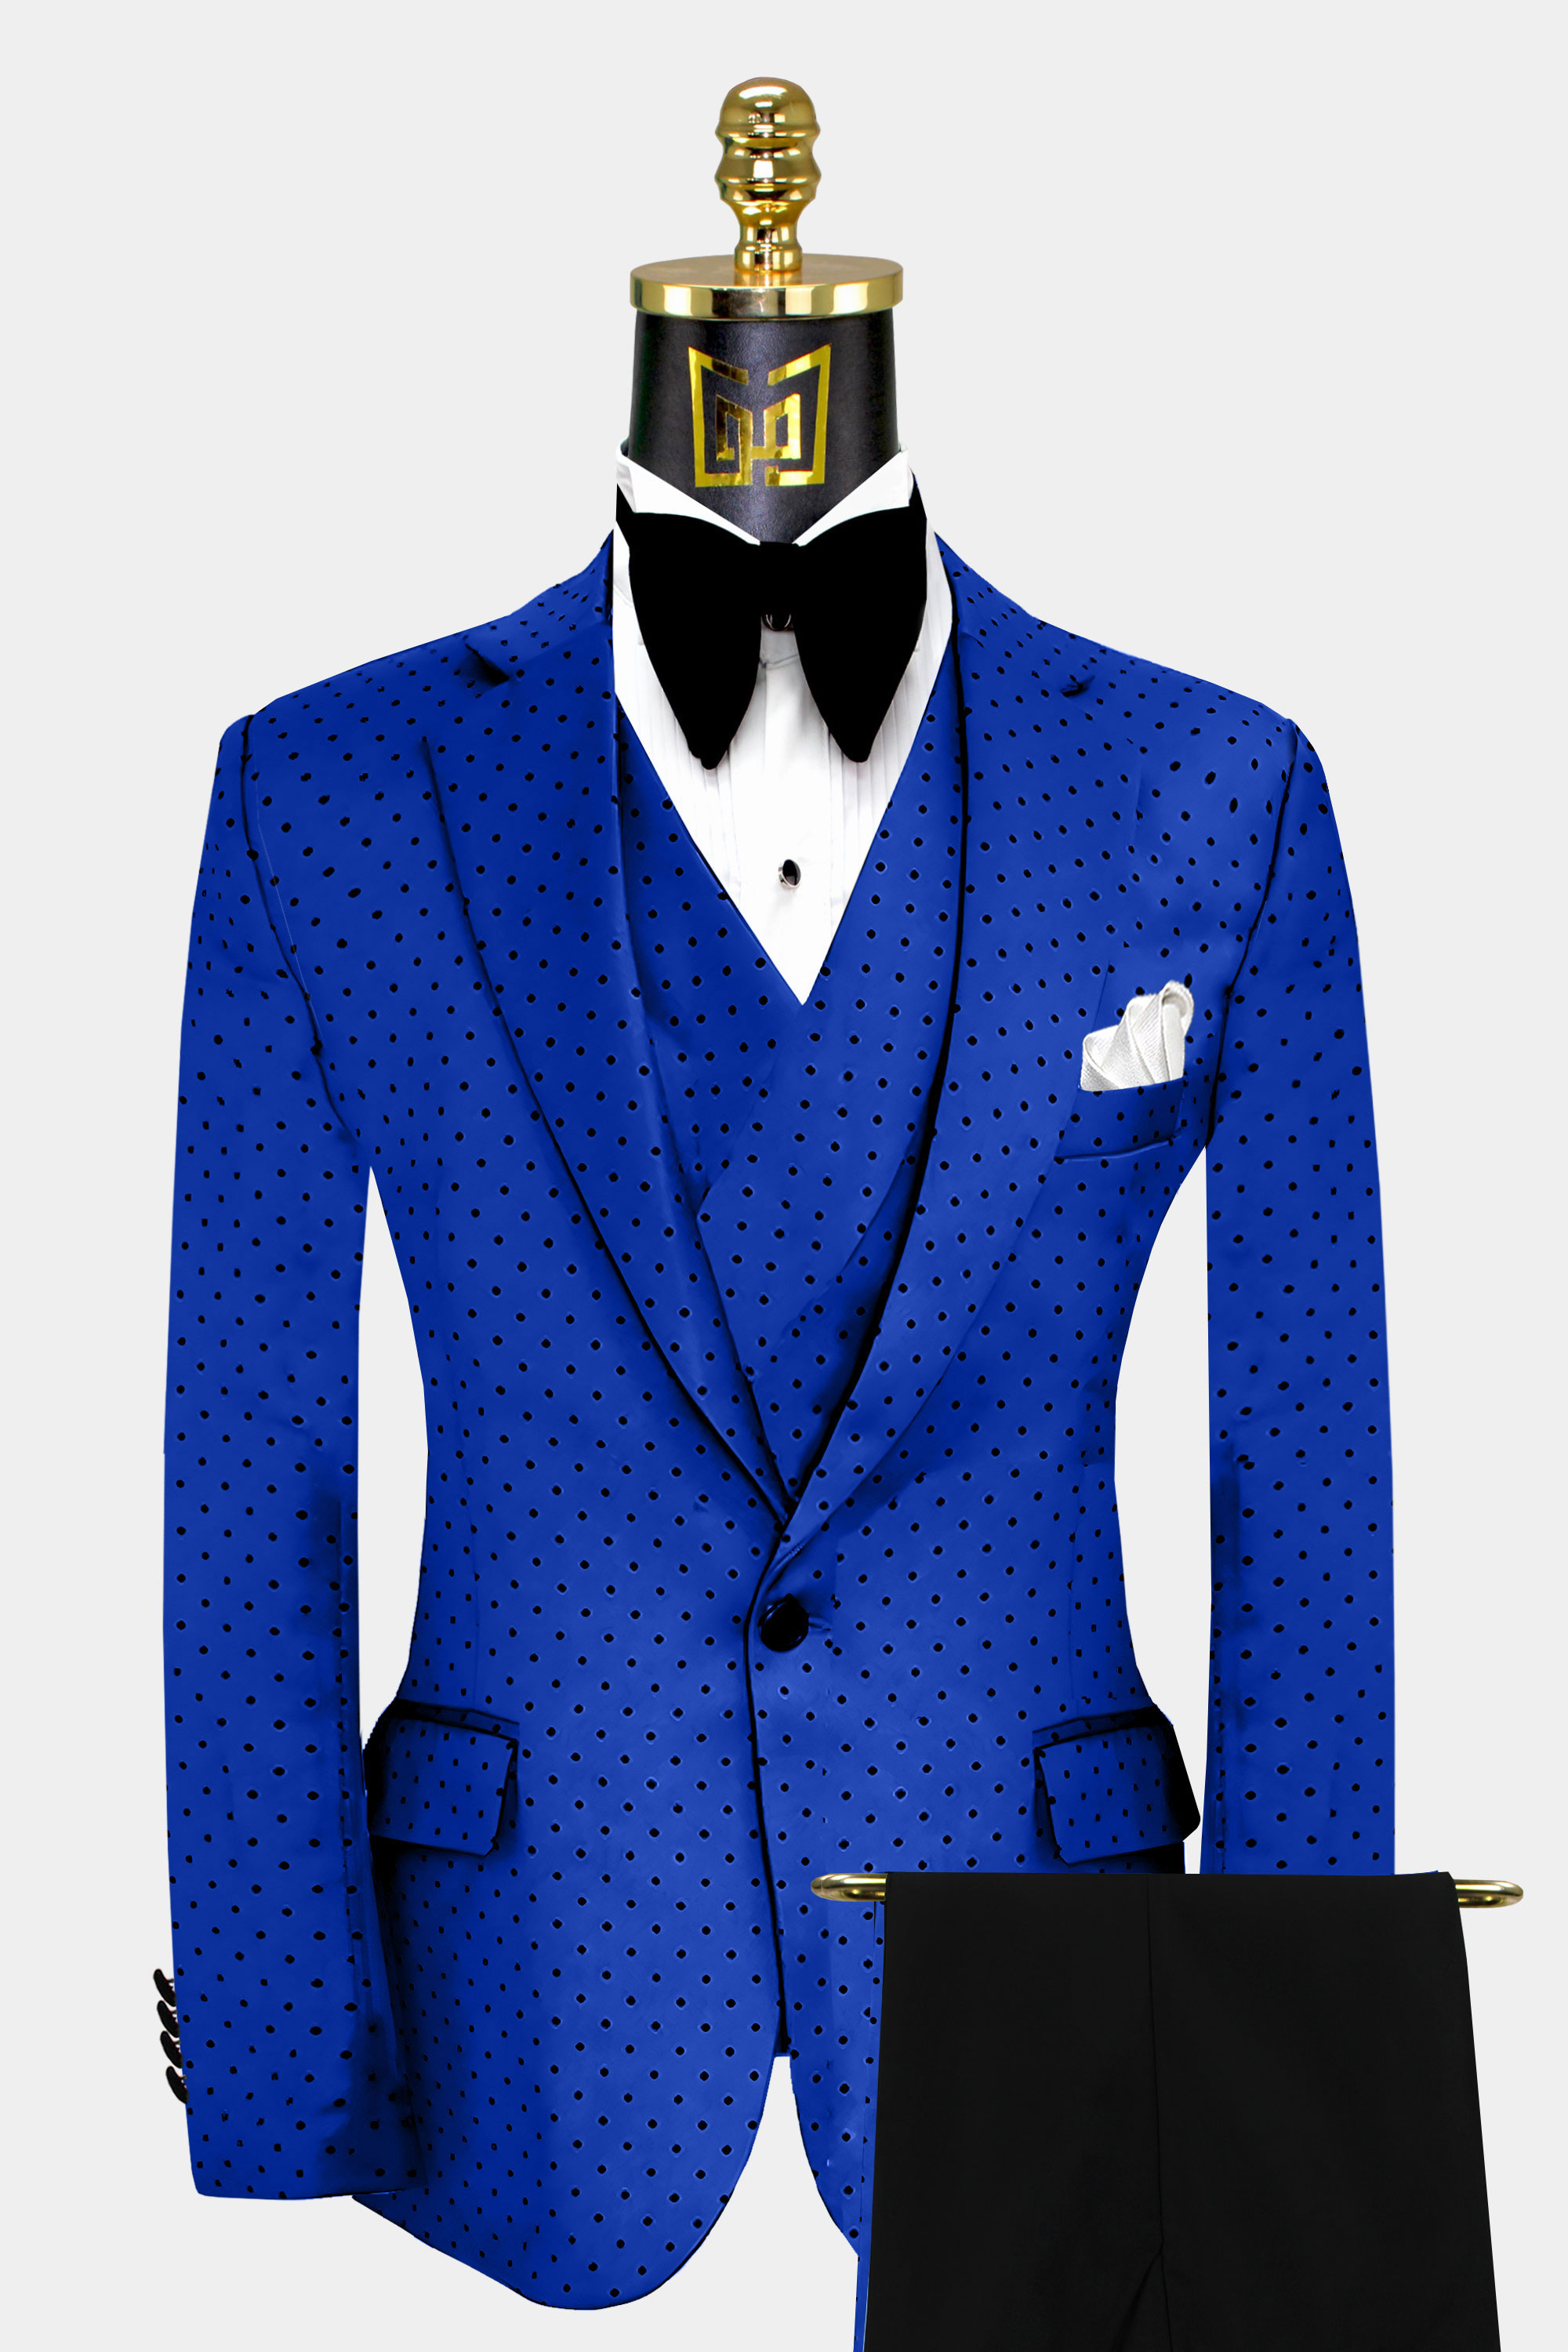 Royal-Blue-Polka-Dot-Suit-Dotted-Groom-Wedding-Tuxedo-from-Gentlemansguru.com